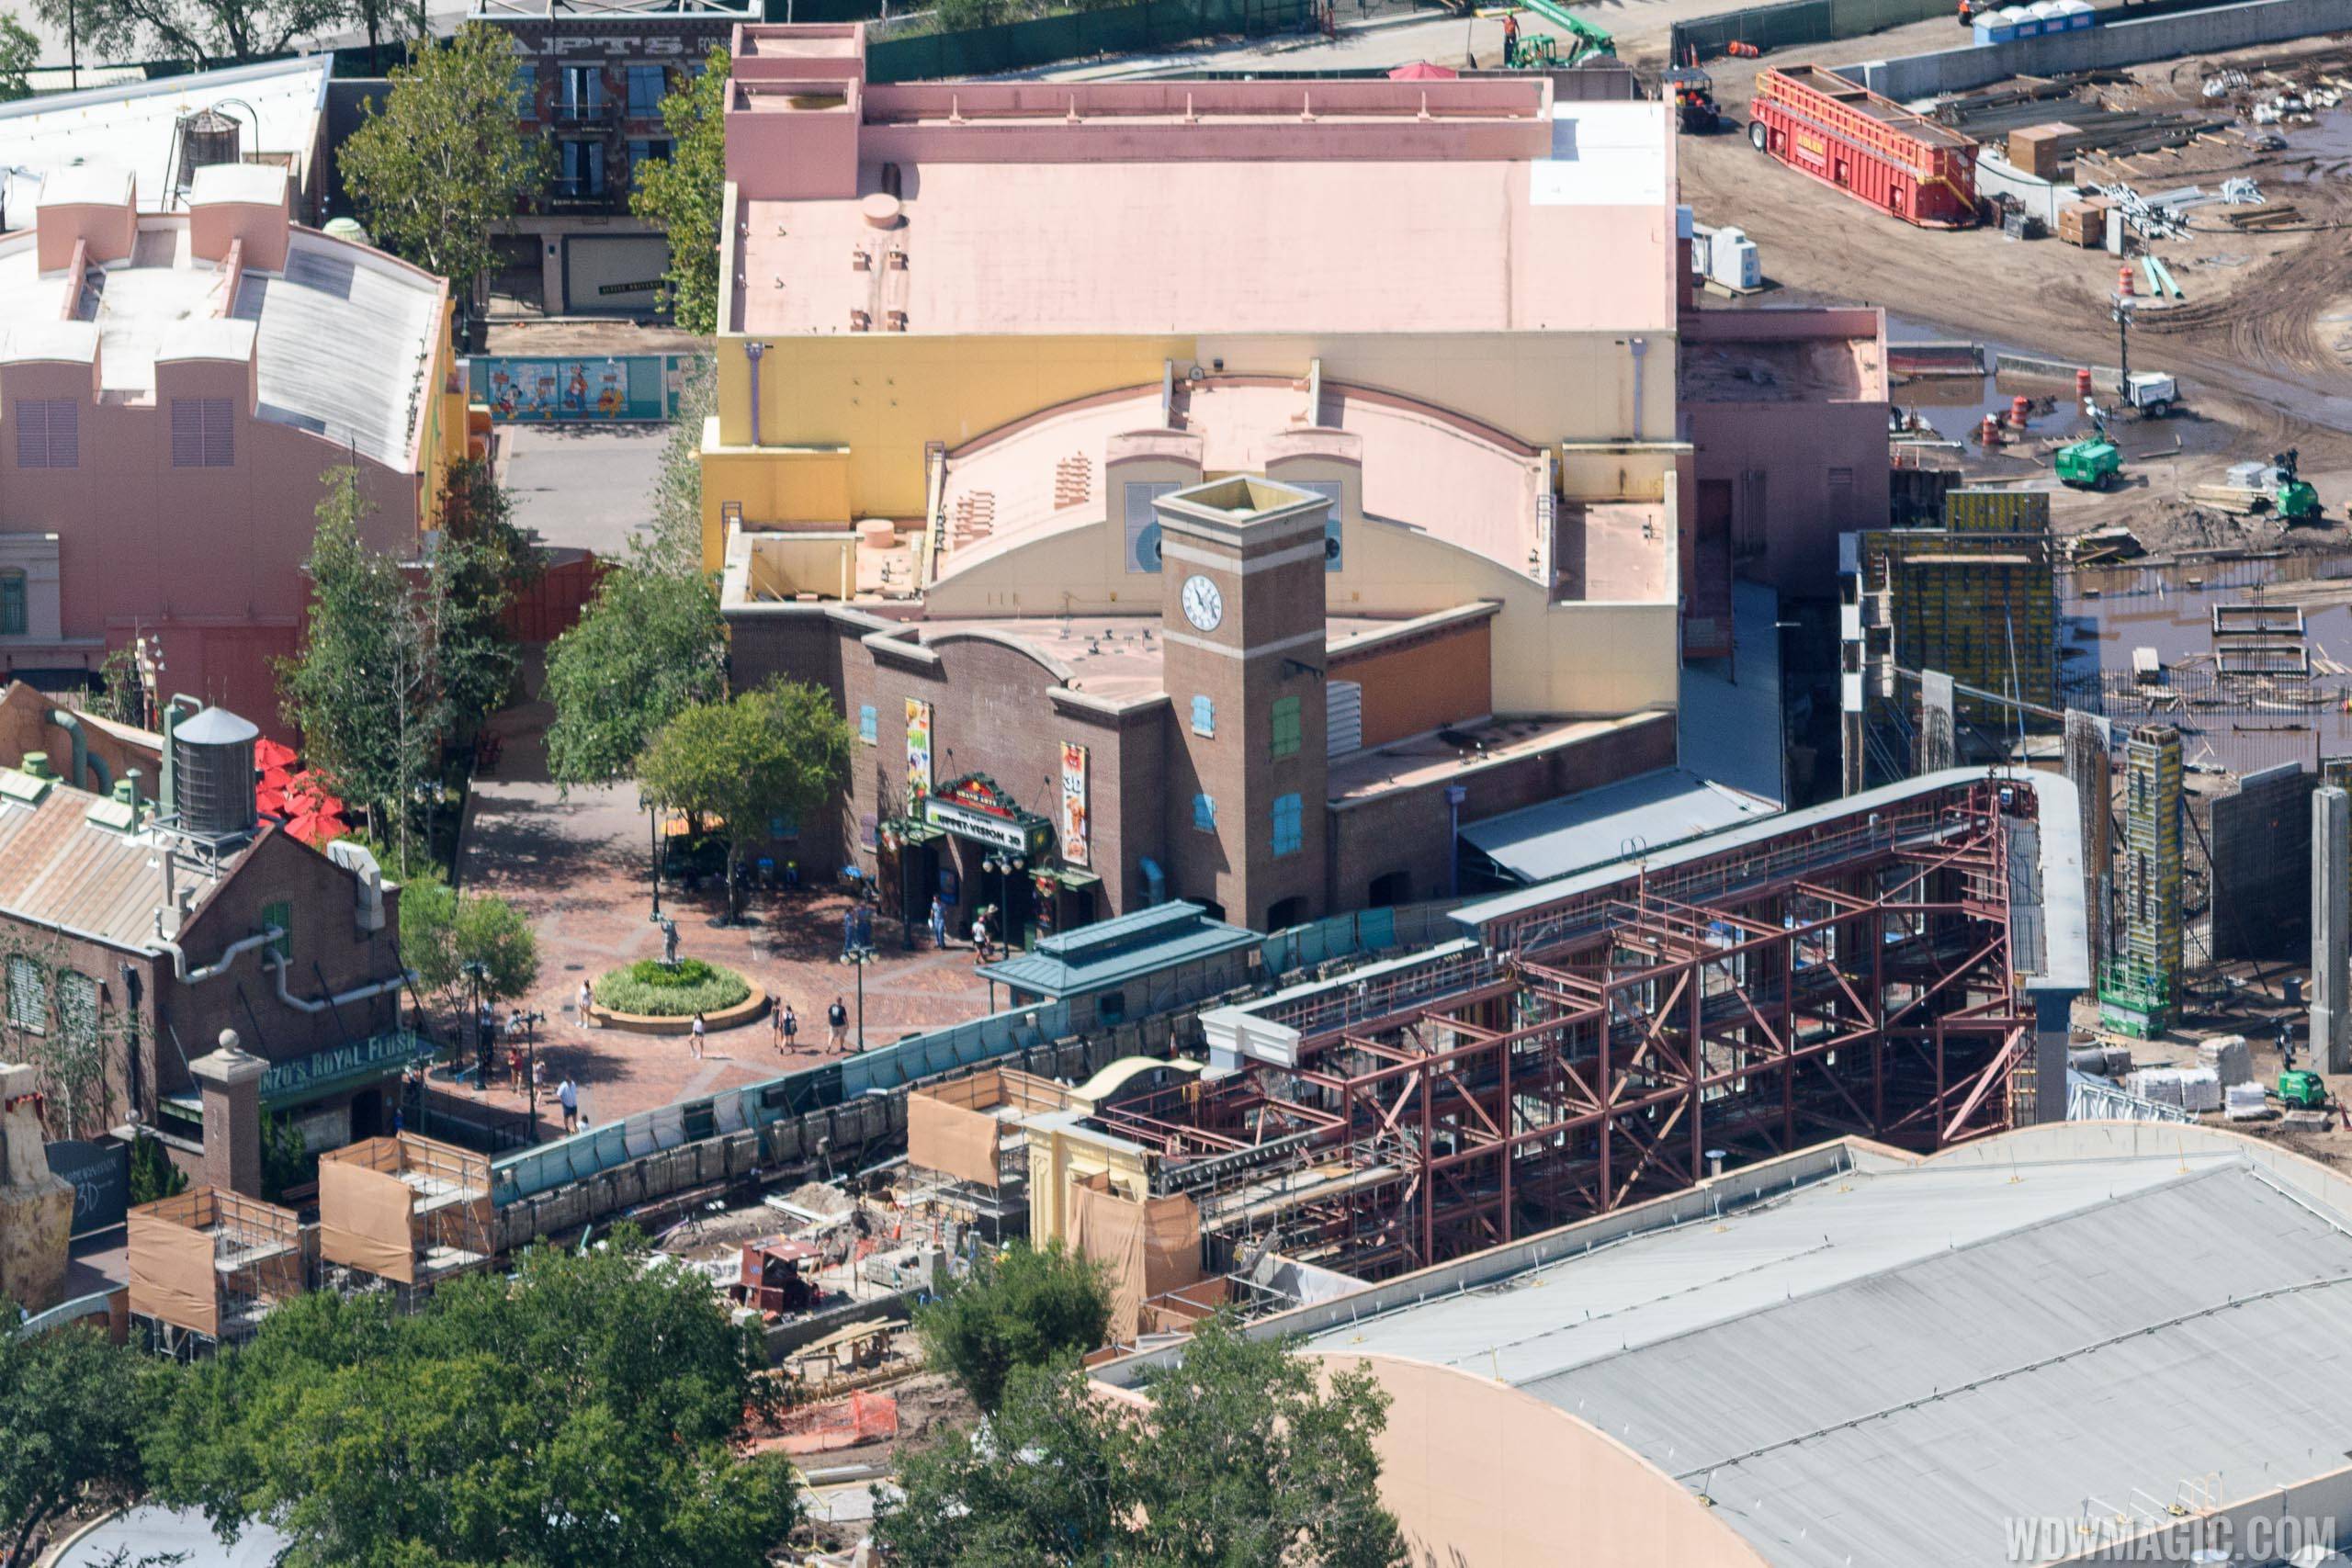 PHOTOS - Aerial views of Grand Avenue construction at Disney's Hollywood Studios